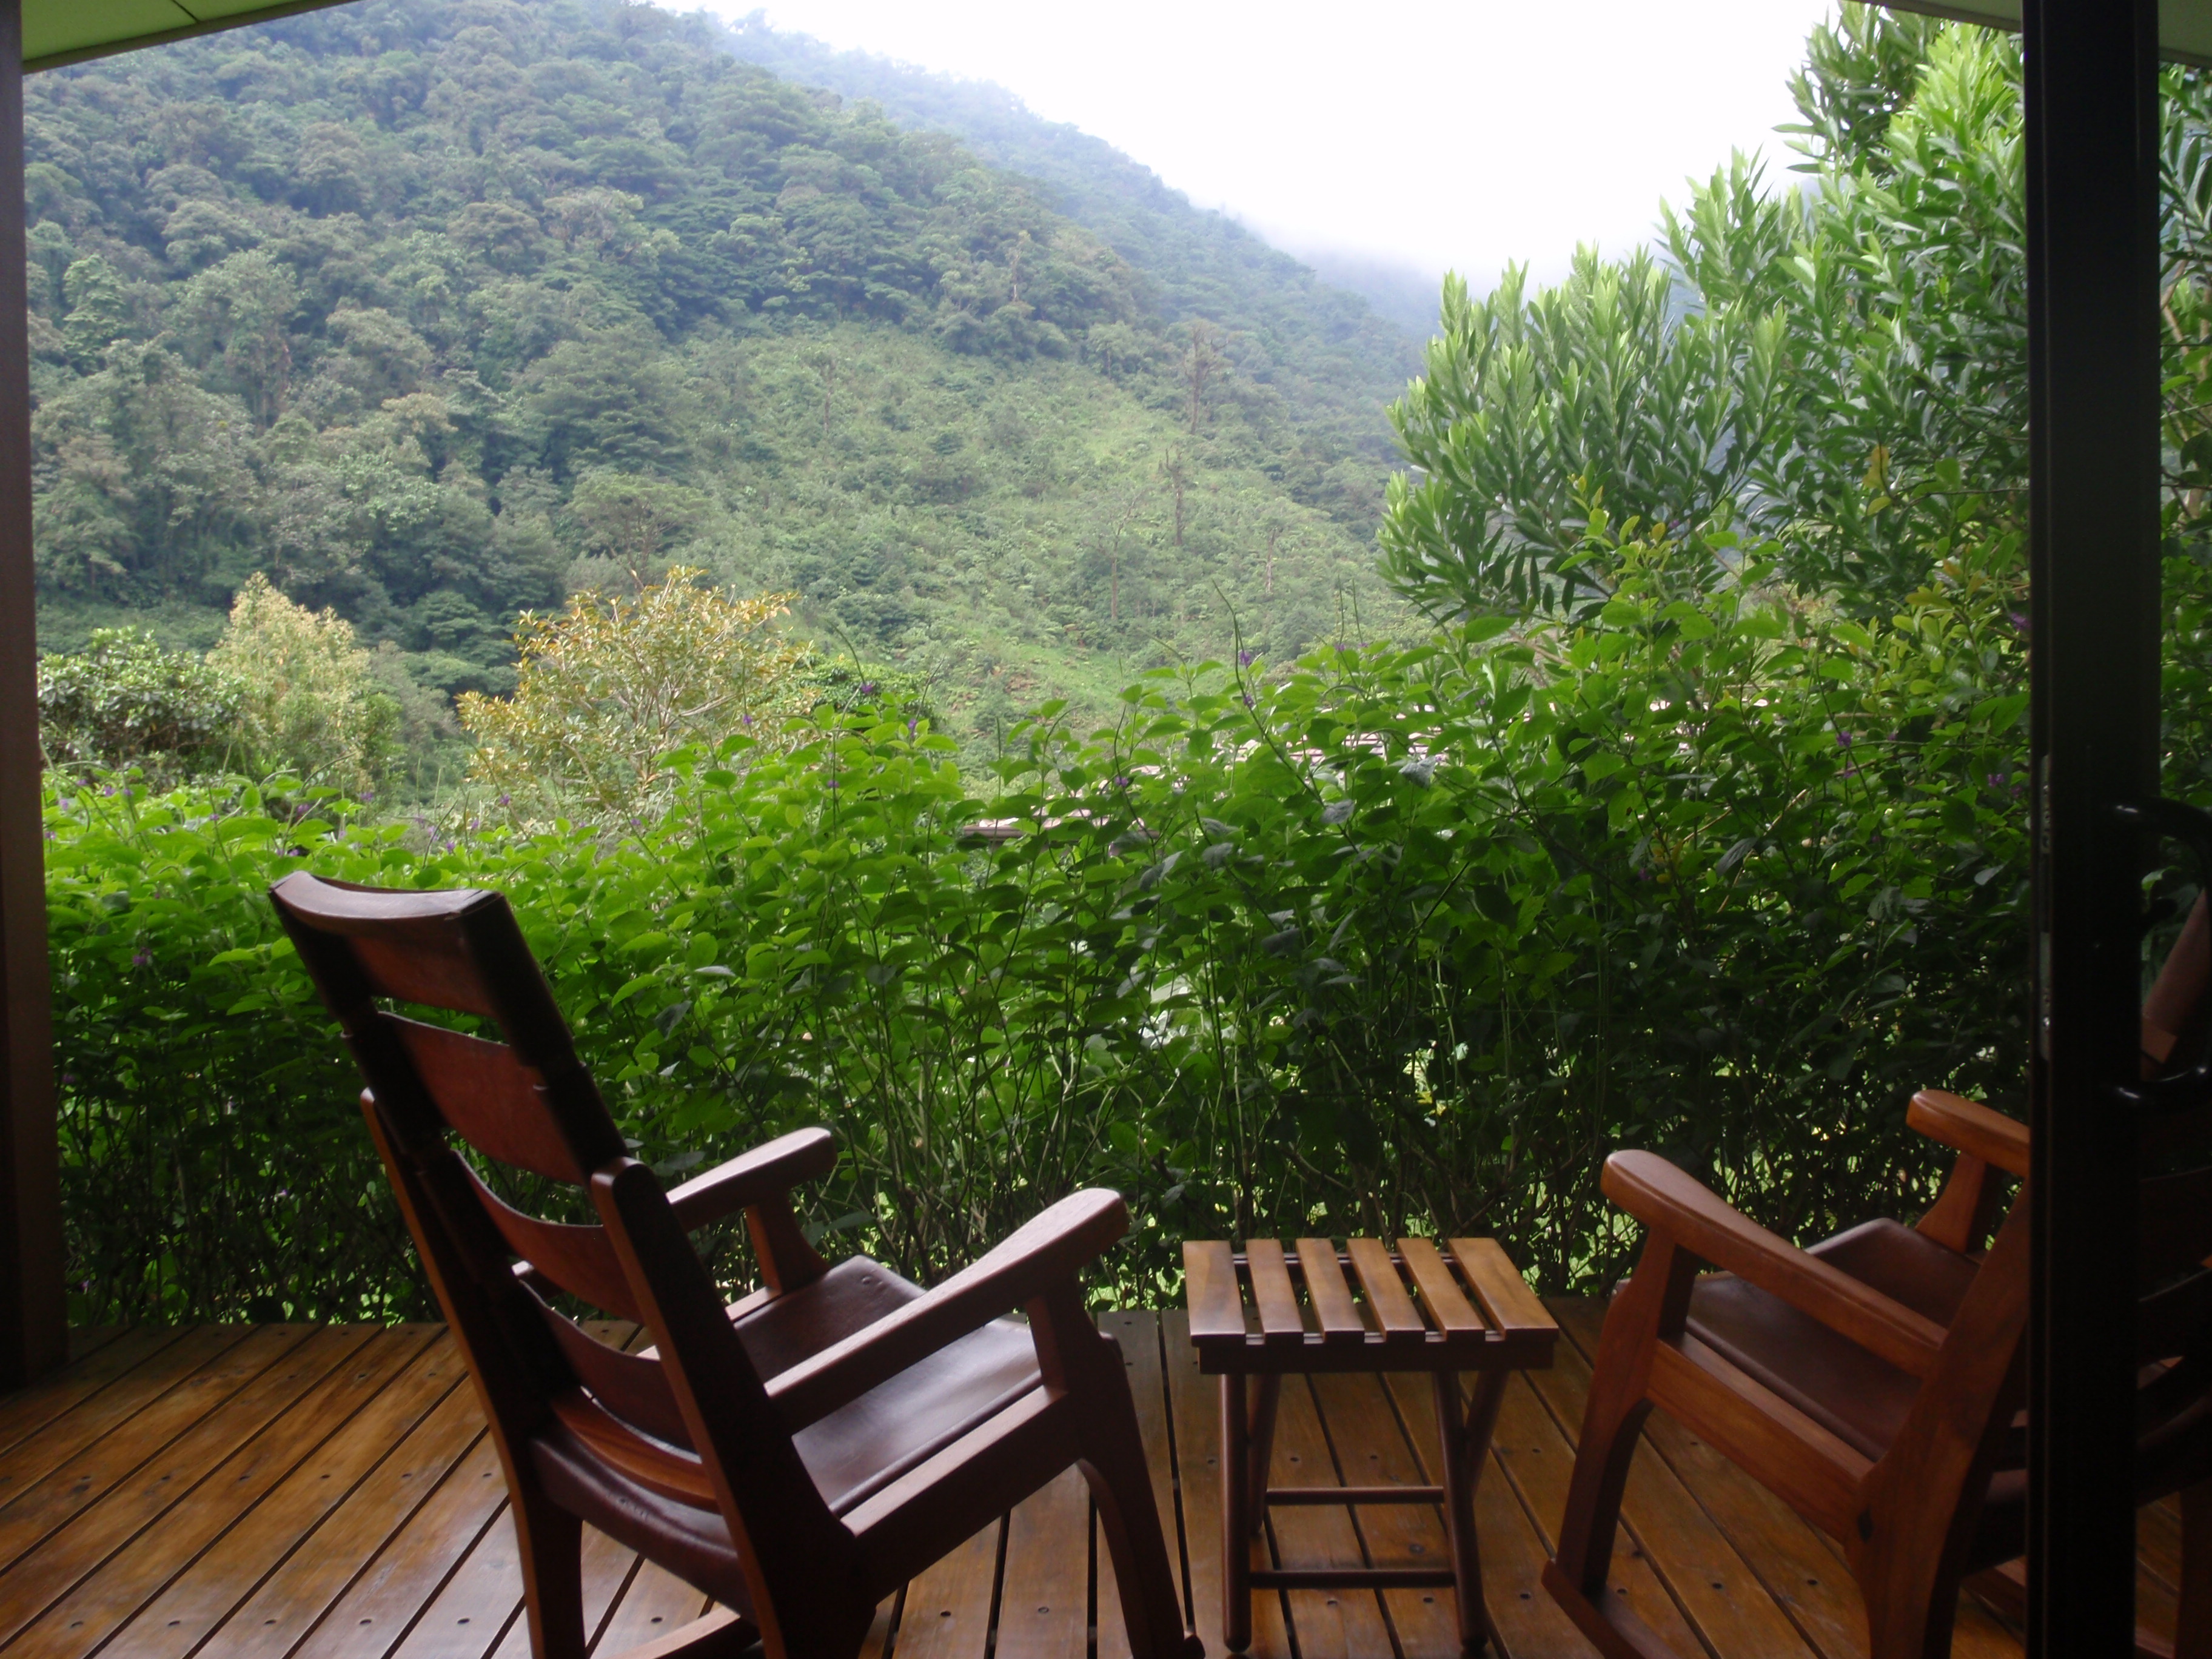 Tranquillo: Honeymoon Costa Rica Style